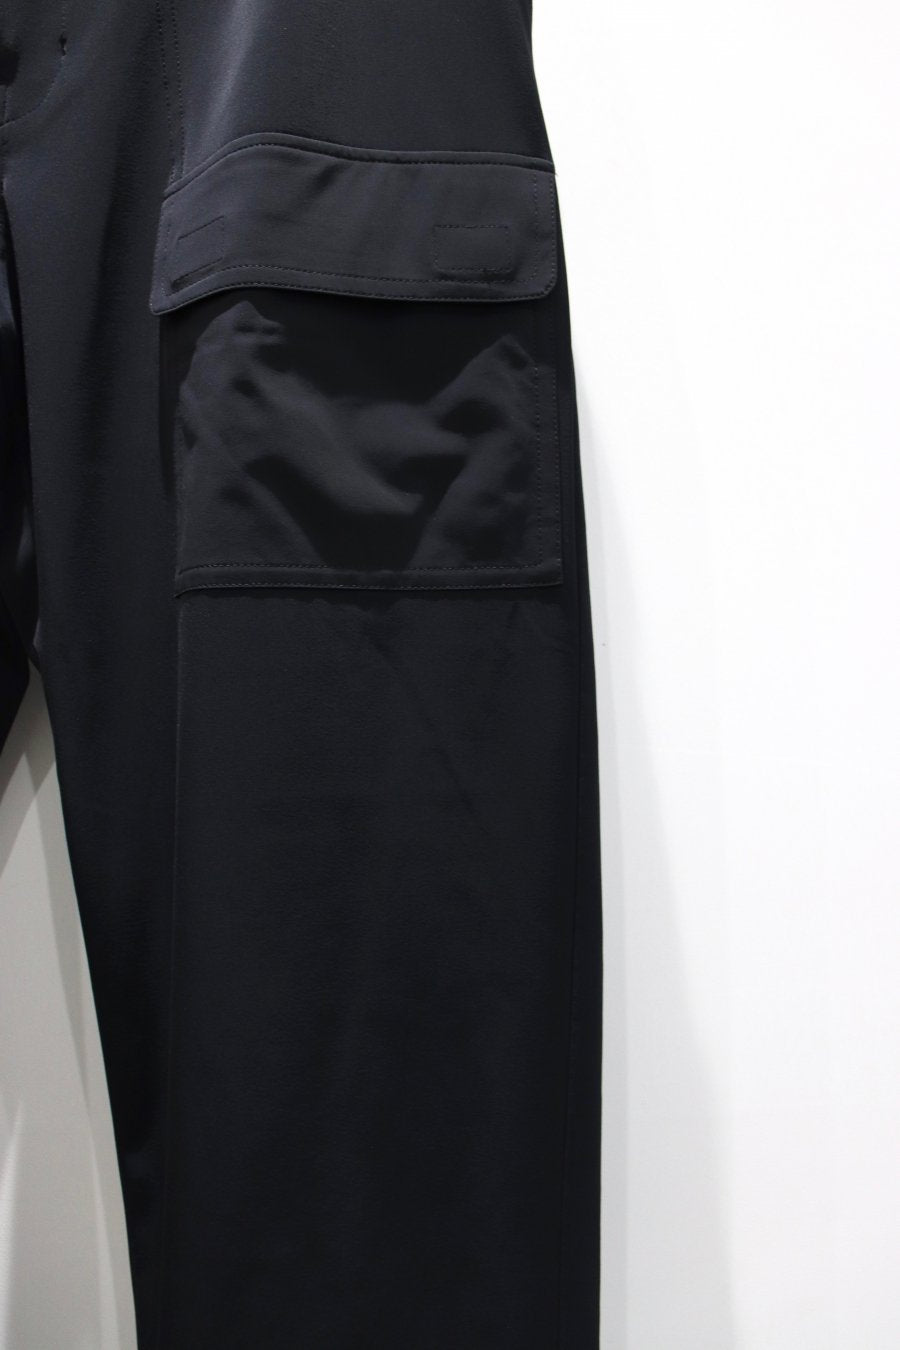 Rajabrook's Kerja Pants 2-Black (Pants) Mail Order | Palette Art 